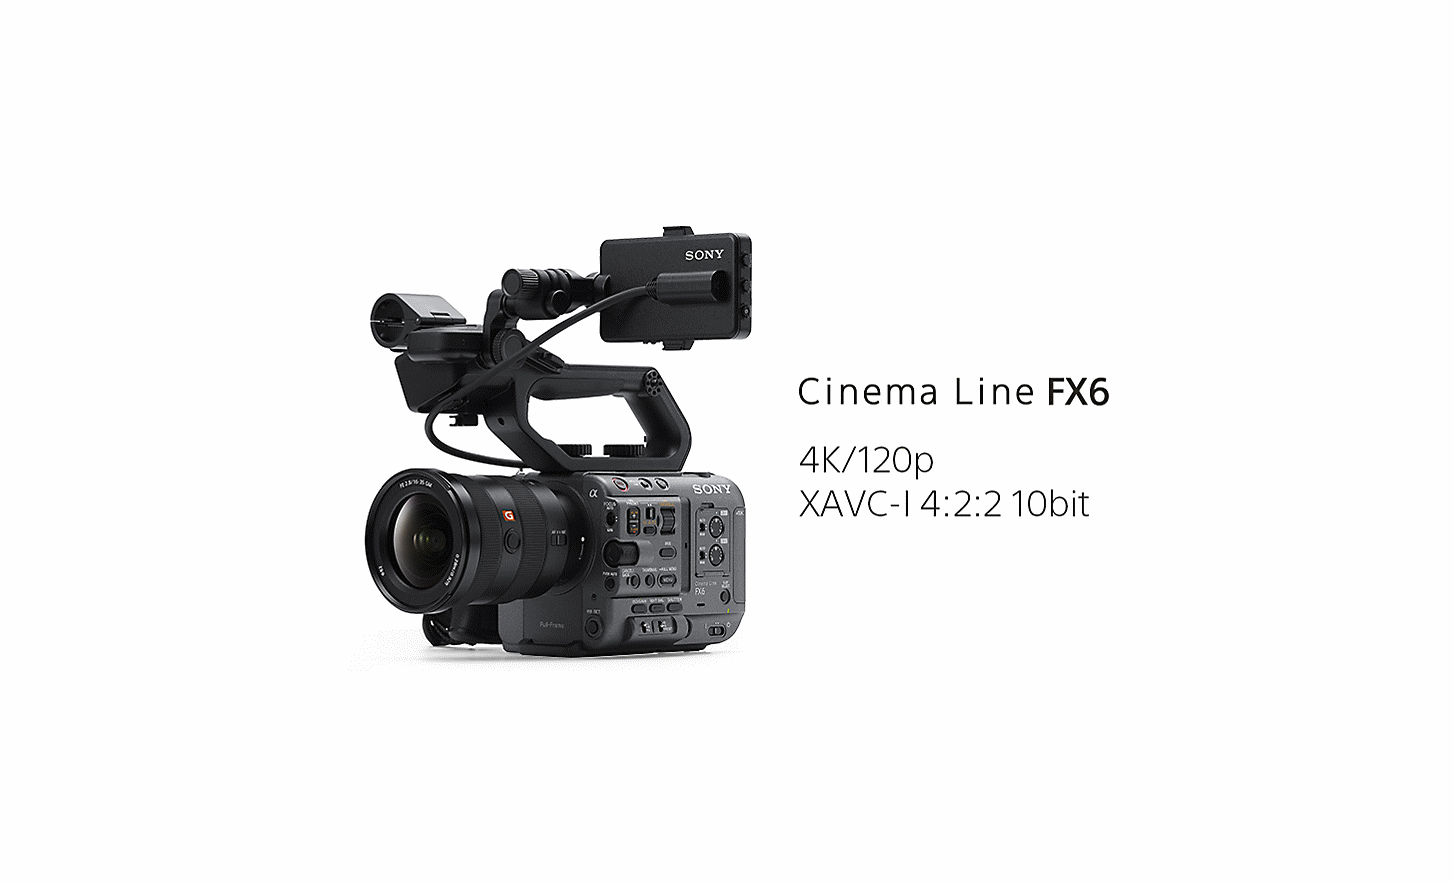 صورة منتج، Cinema Line FX6‏، 4K/120p‏ وXAVC S-I‏ 4:2:2 10 بت وحساس Exmor R CMOS وBIONZ XR و4K HDR وXAVC